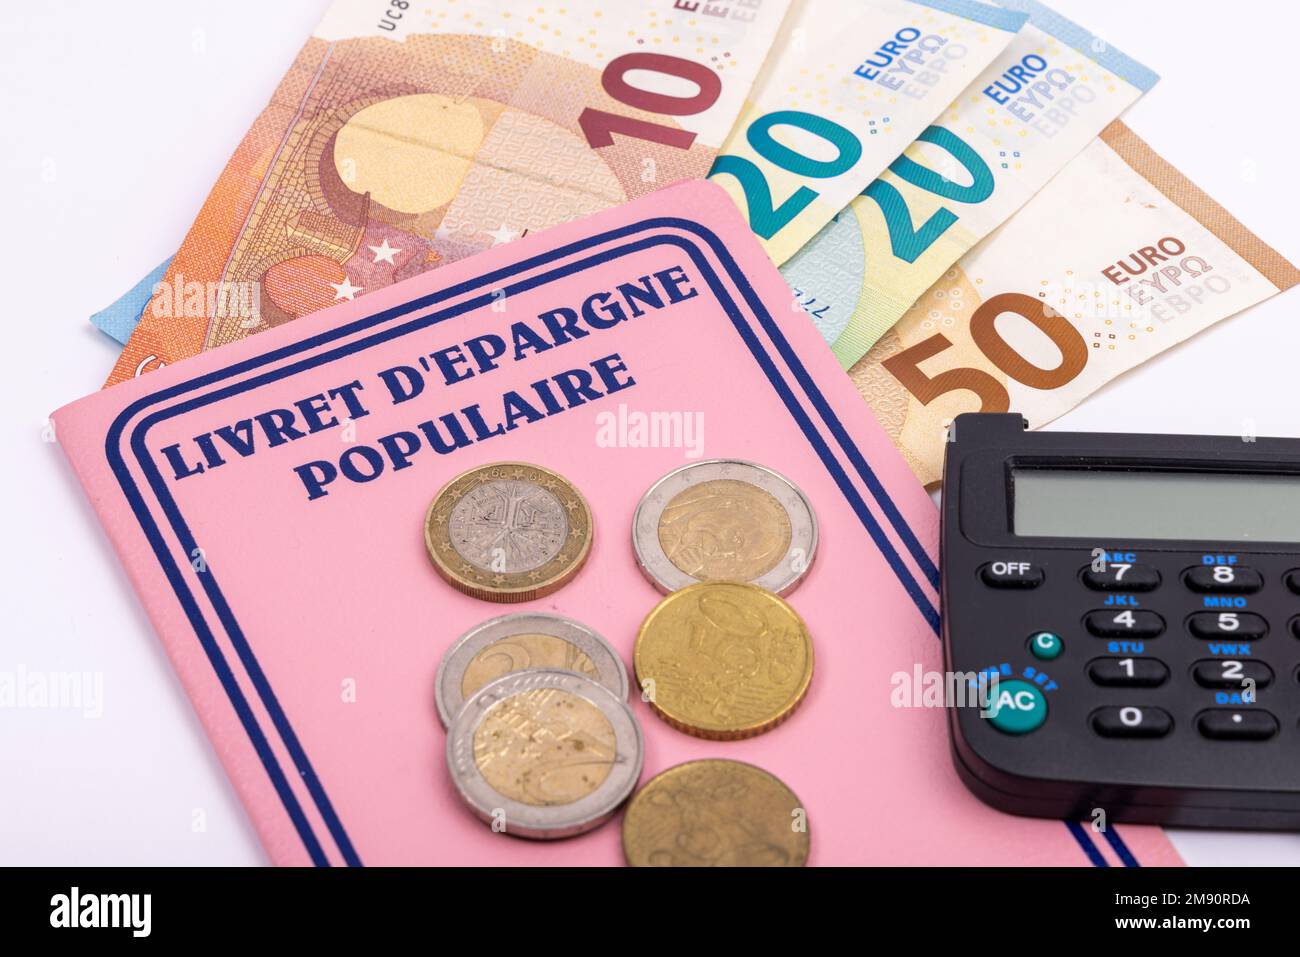 Parigi, Francia - 16 gennaio 2023 : libro di risparmio Livret d'Epargne Populaire. Il tasso d'interesse del Livret d'Epargne Populaire aumenta il 1 febbraio; Foto Stock